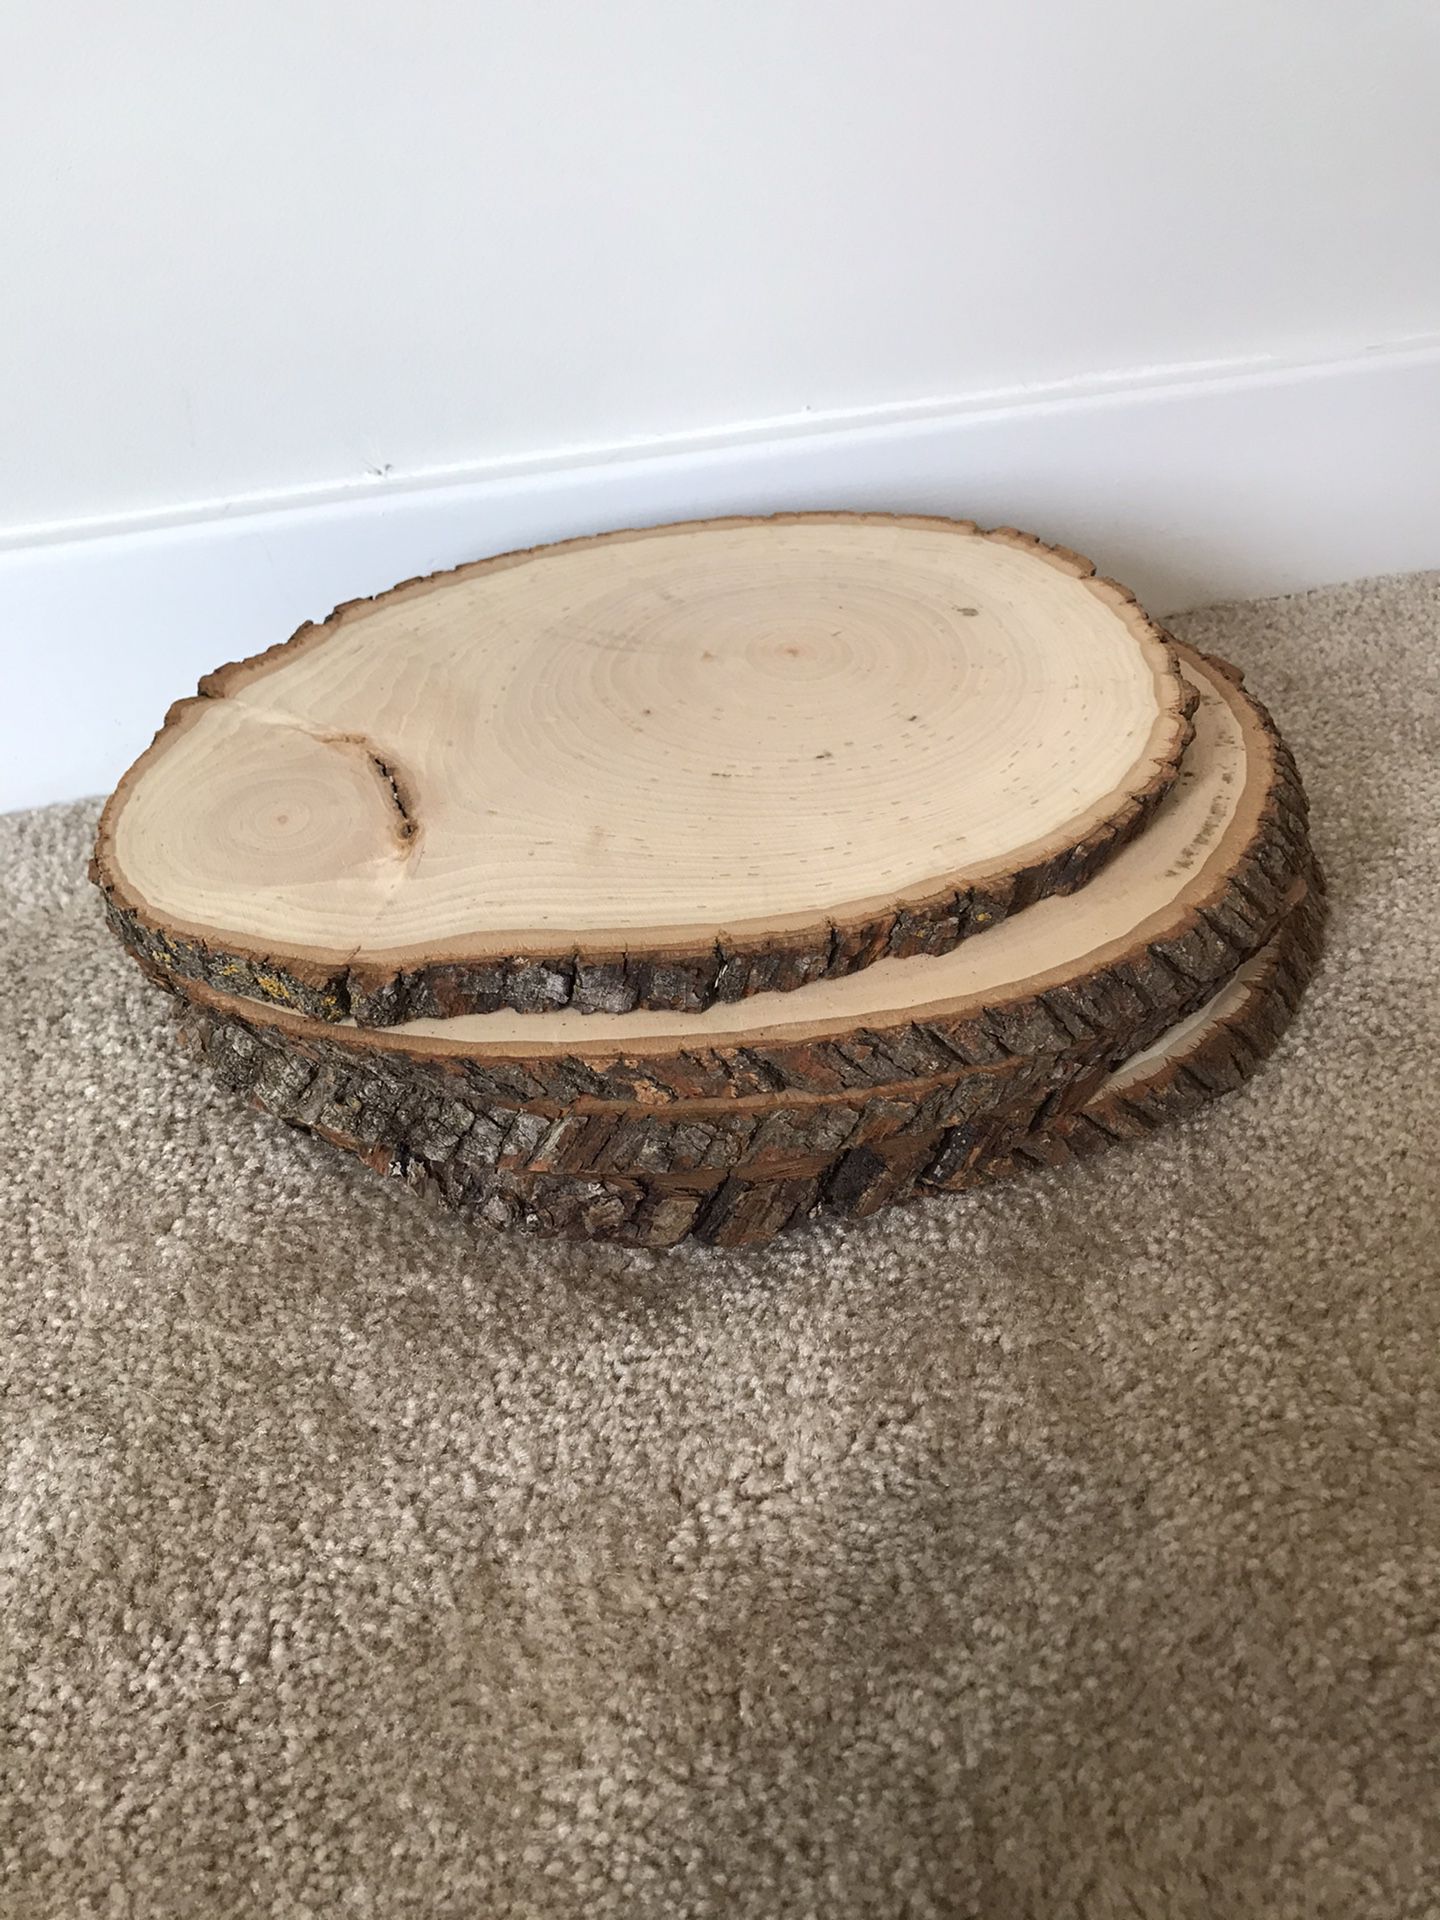 Oval wooden discs